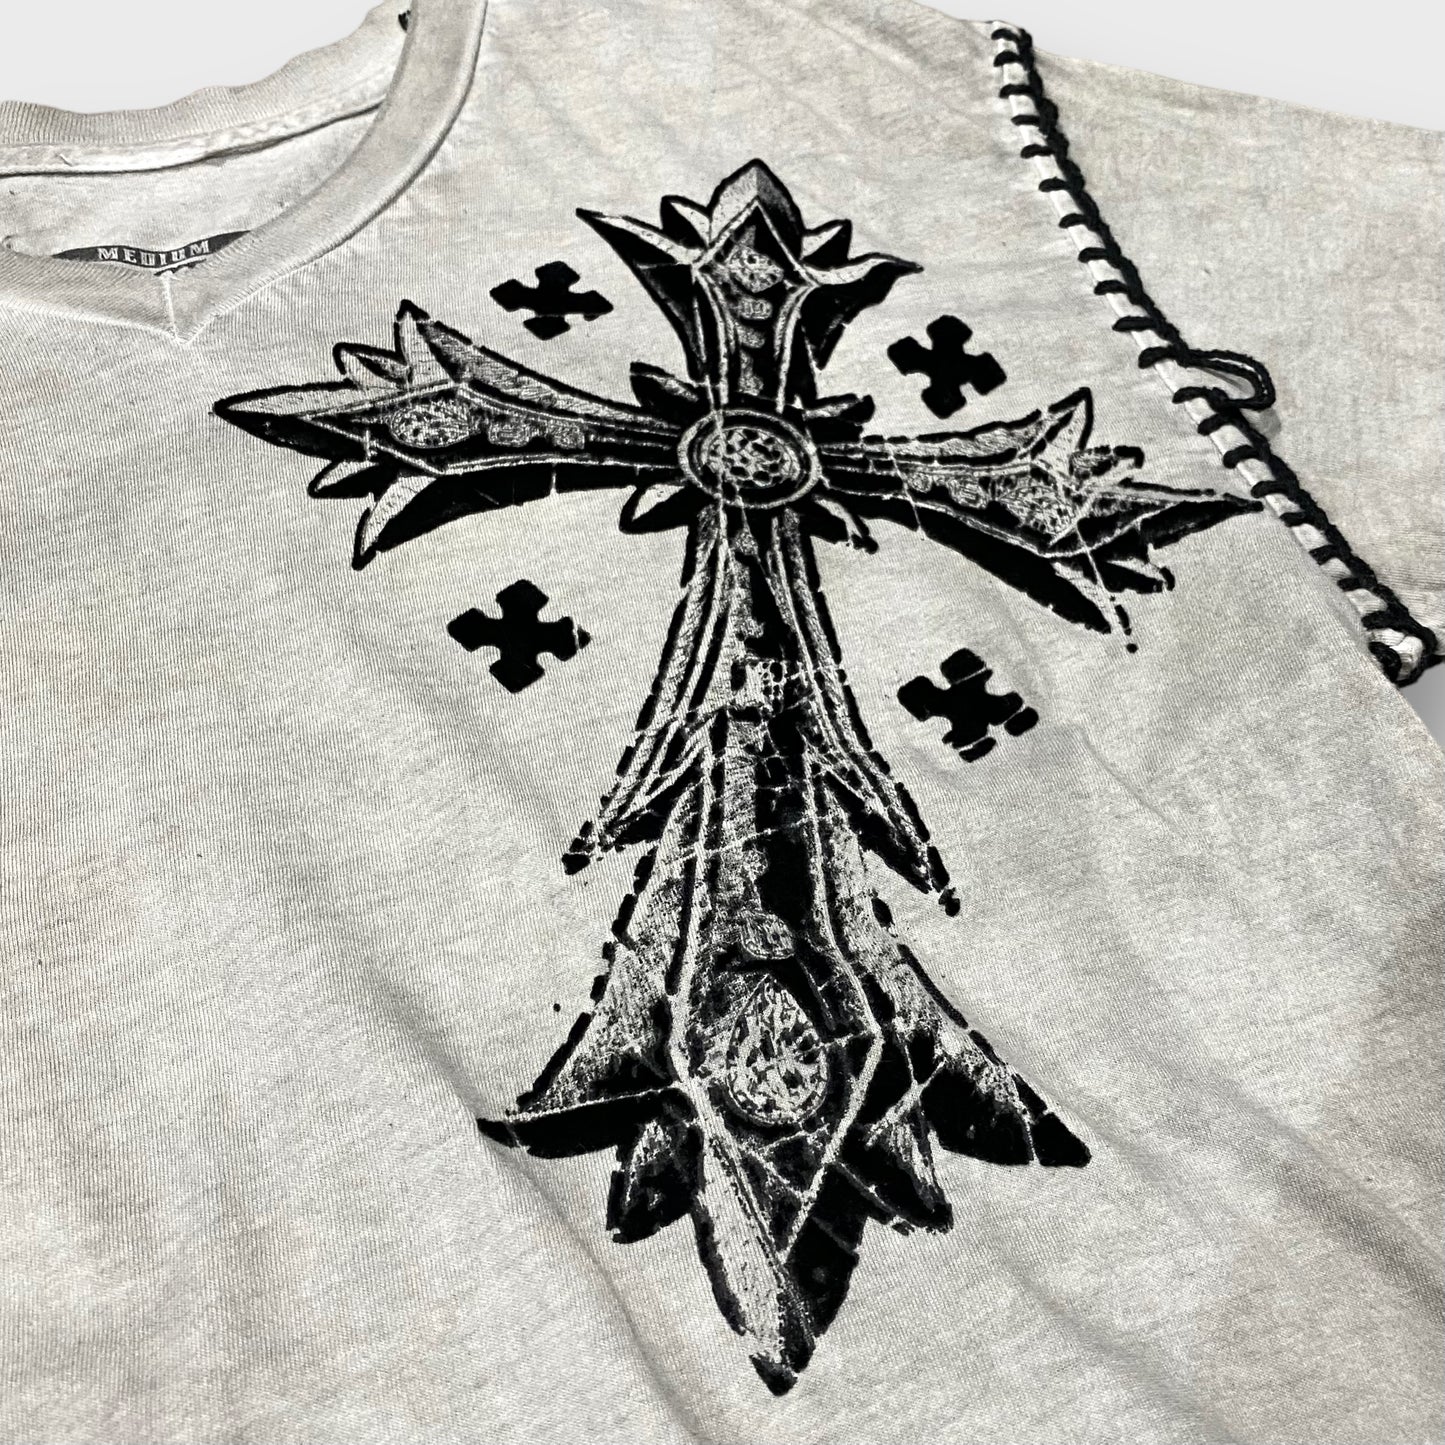 "RAW STATE" Cross design t-shirt